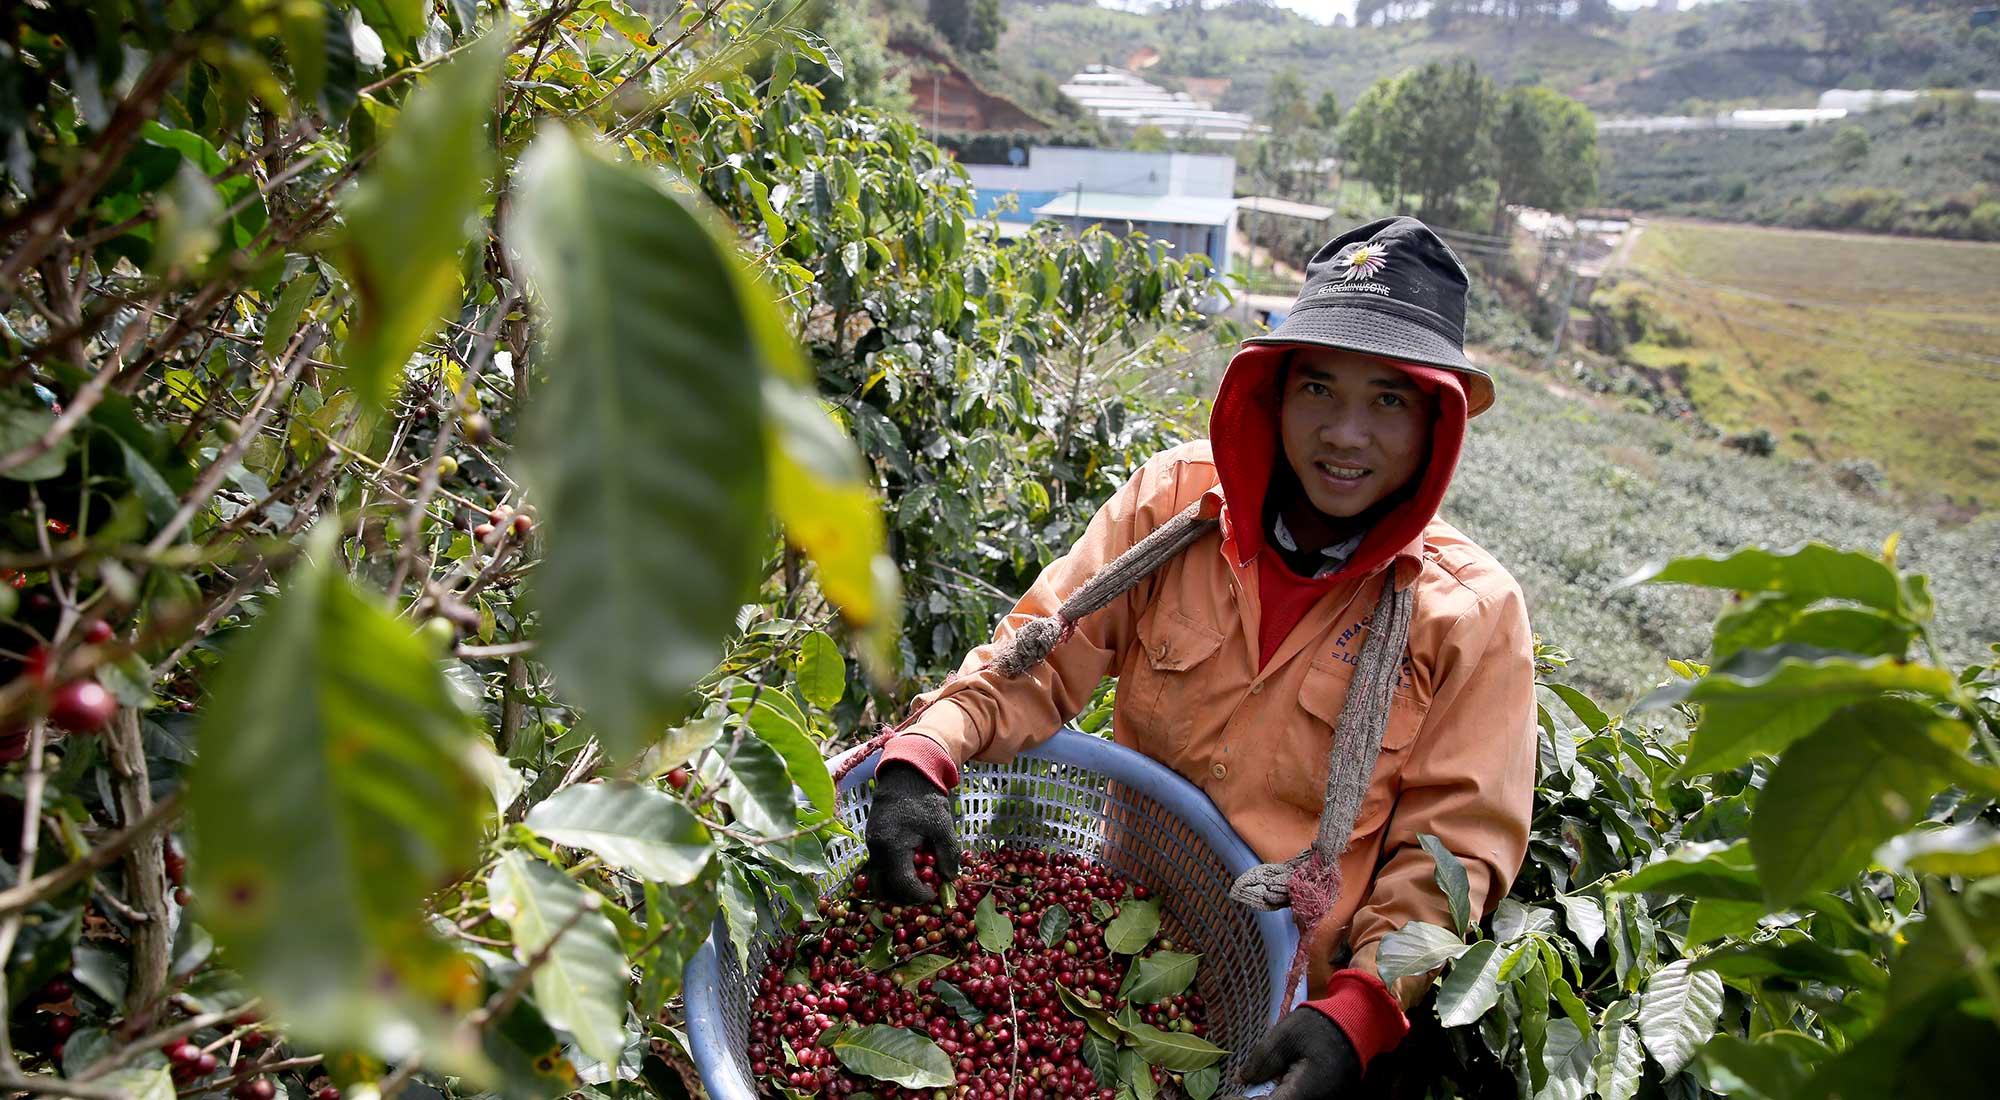 Young worker harvesting coffee in Vietnam - Vision Zero Fund 2021